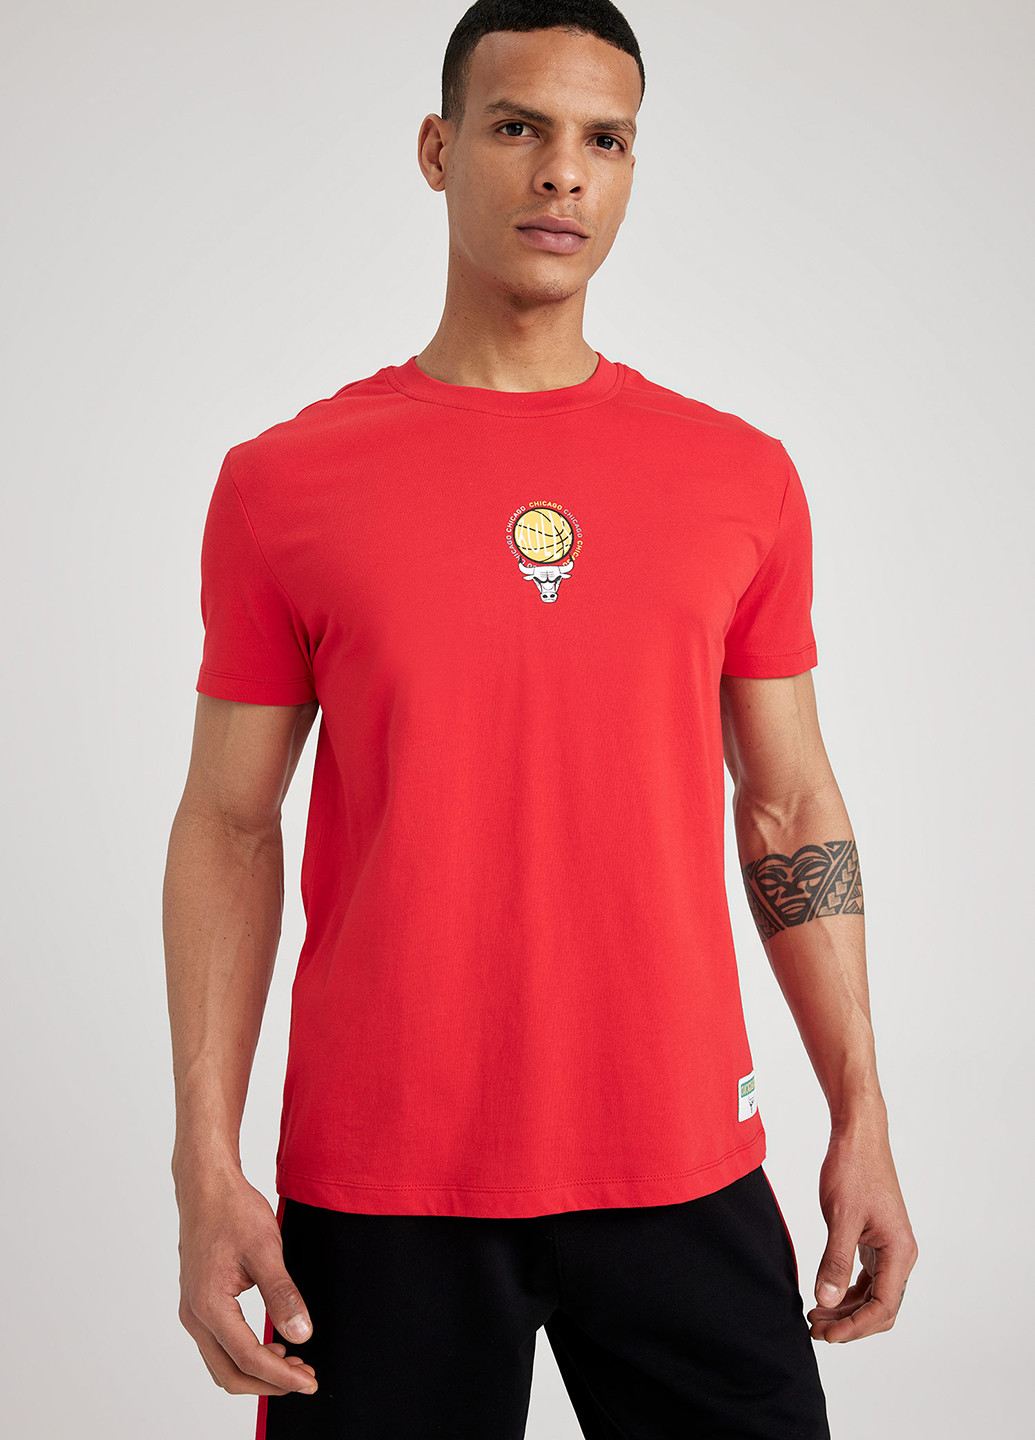 Красная футболка DeFacto